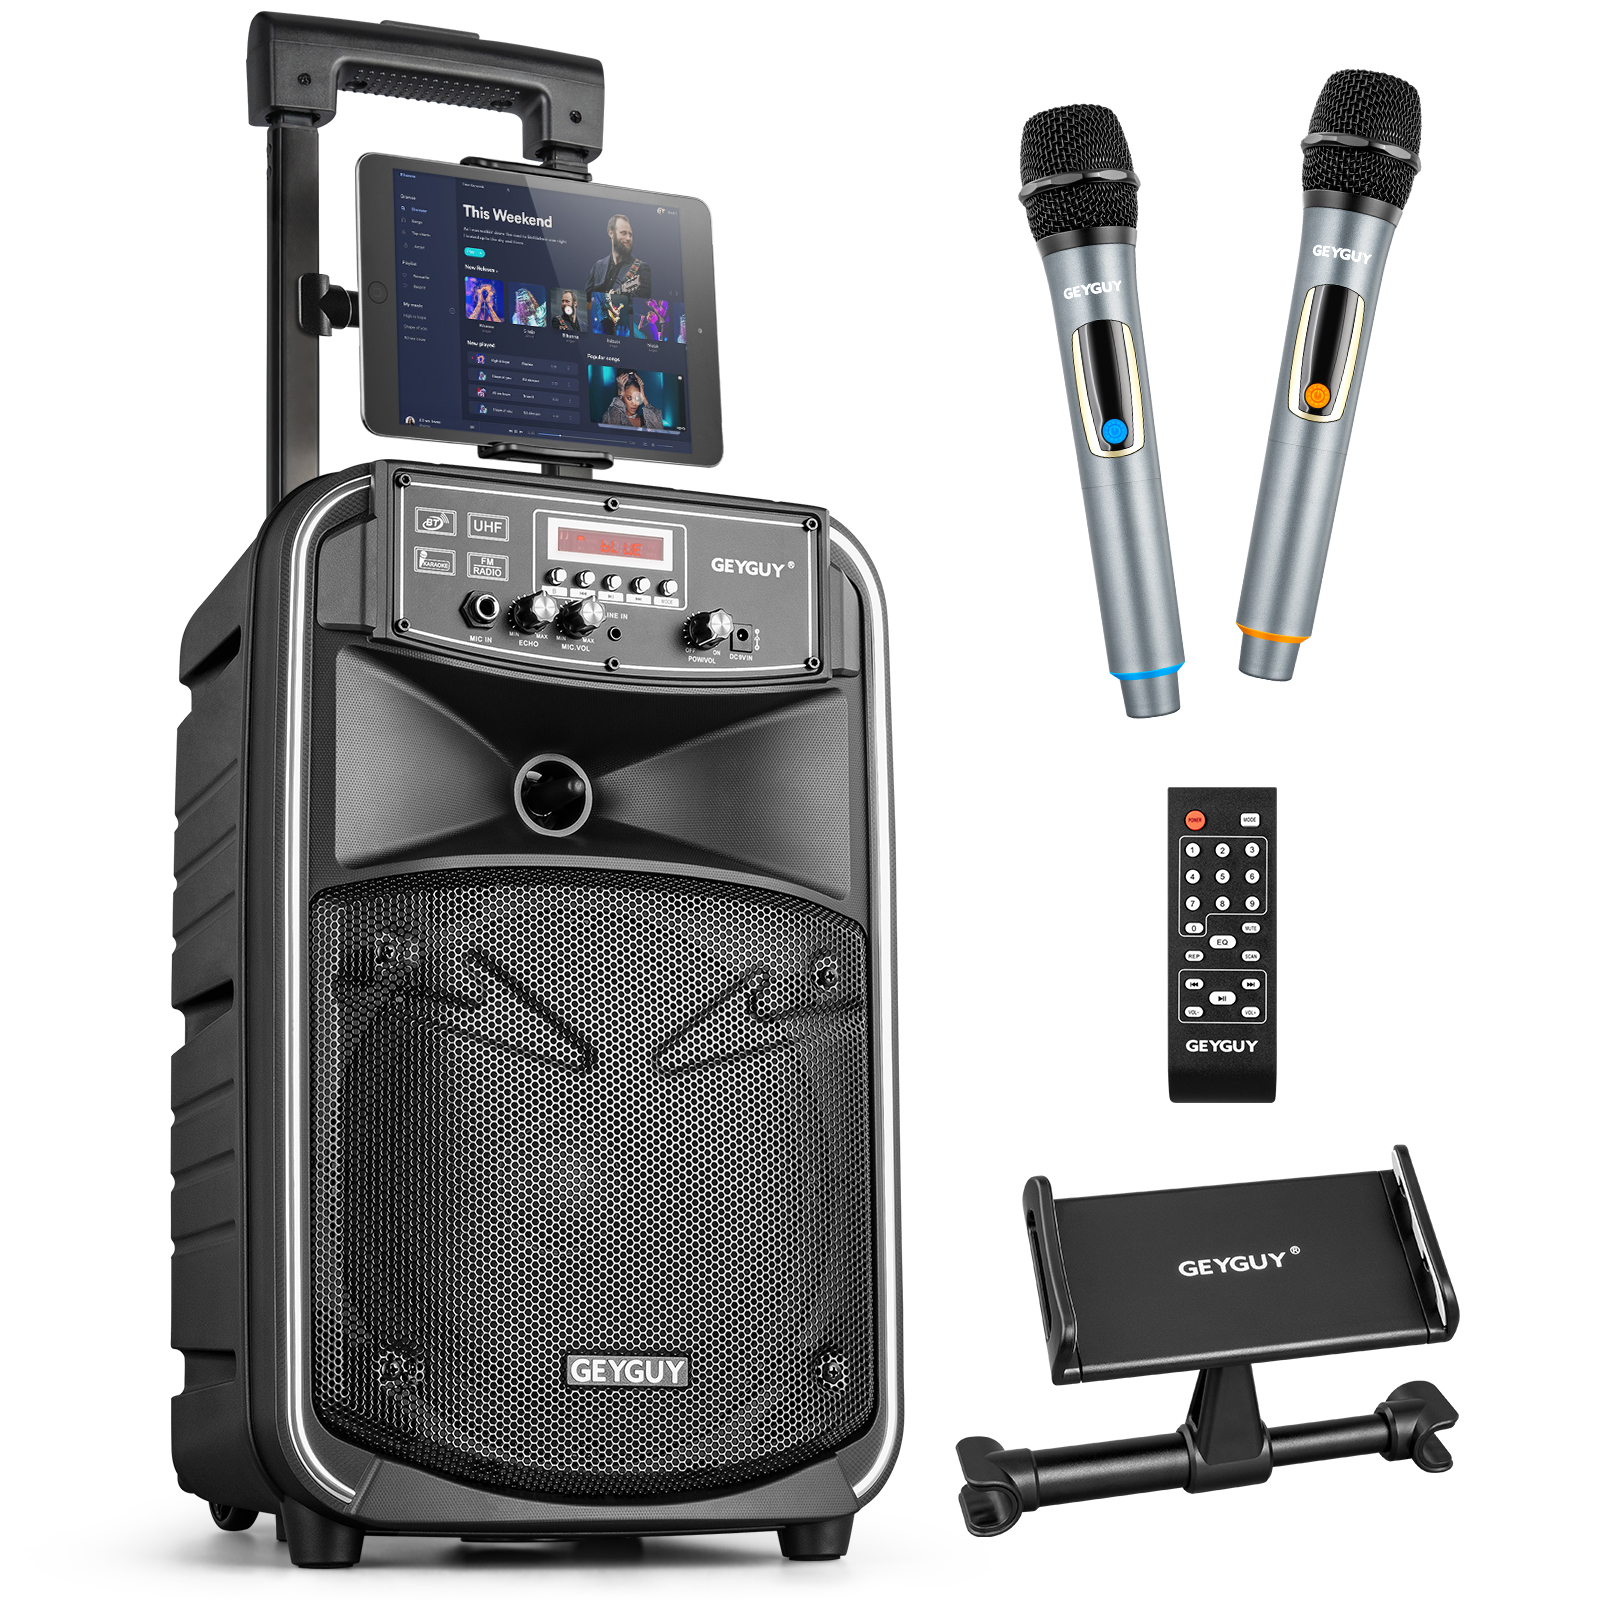 GTSK8-2 Portable Karaoke Machine with Two Wireless Microphone